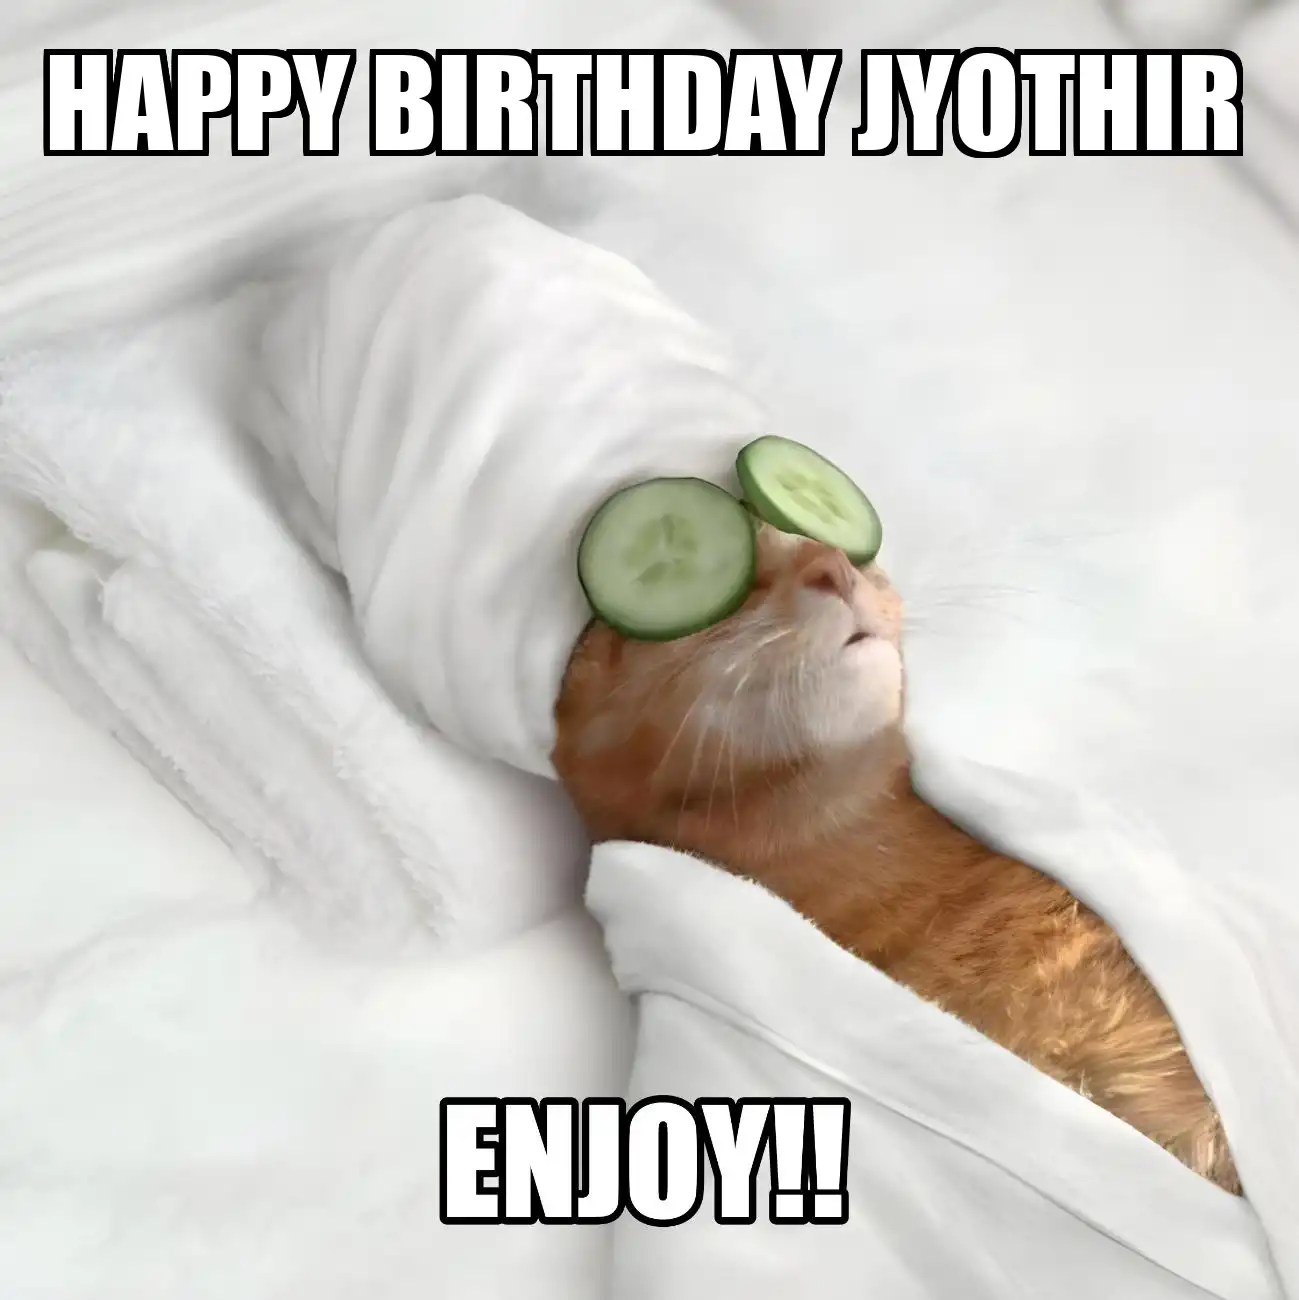 Happy Birthday Jyothir Enjoy Cat Meme